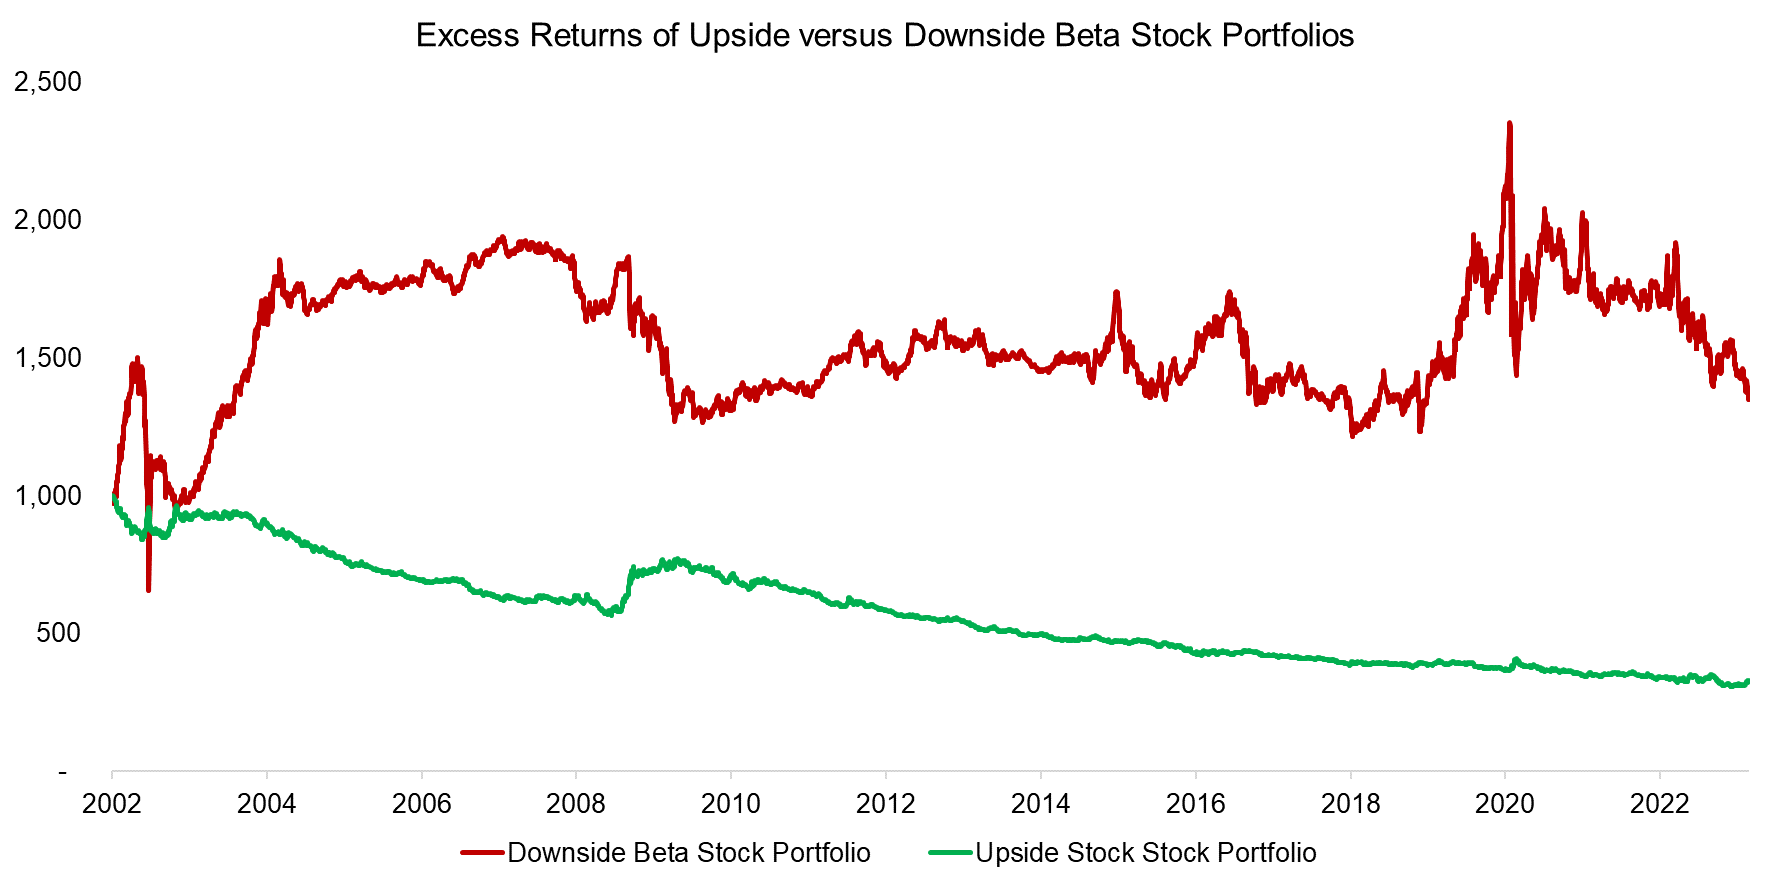 Excess Returns of Upside versus Downside Beta Stock Portfolios